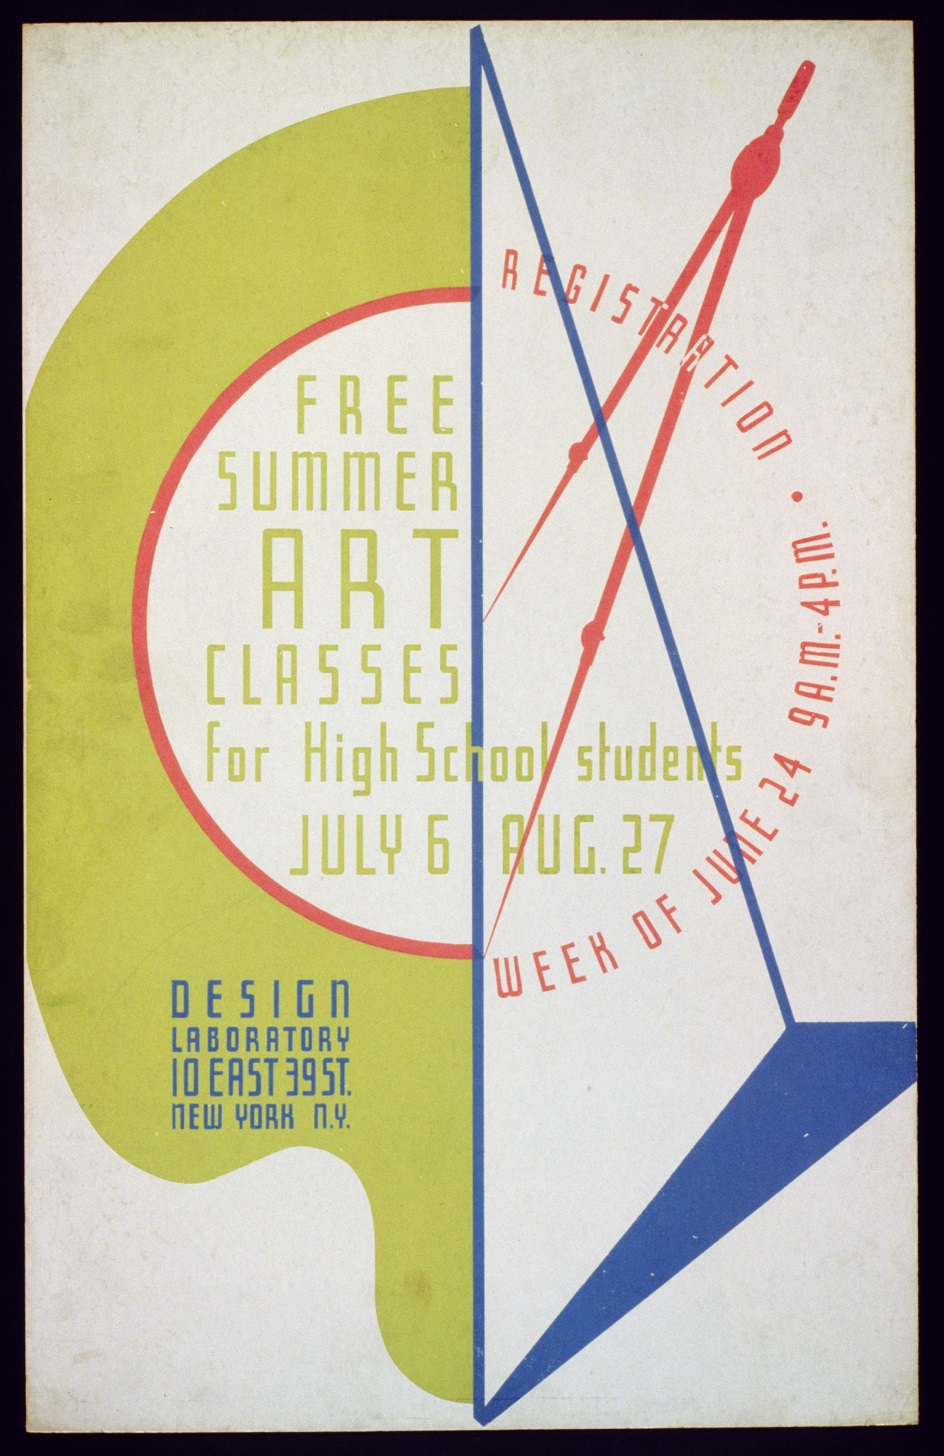 Энтони Велонис. Постер Free summer art classes for high school students, 1936-1938